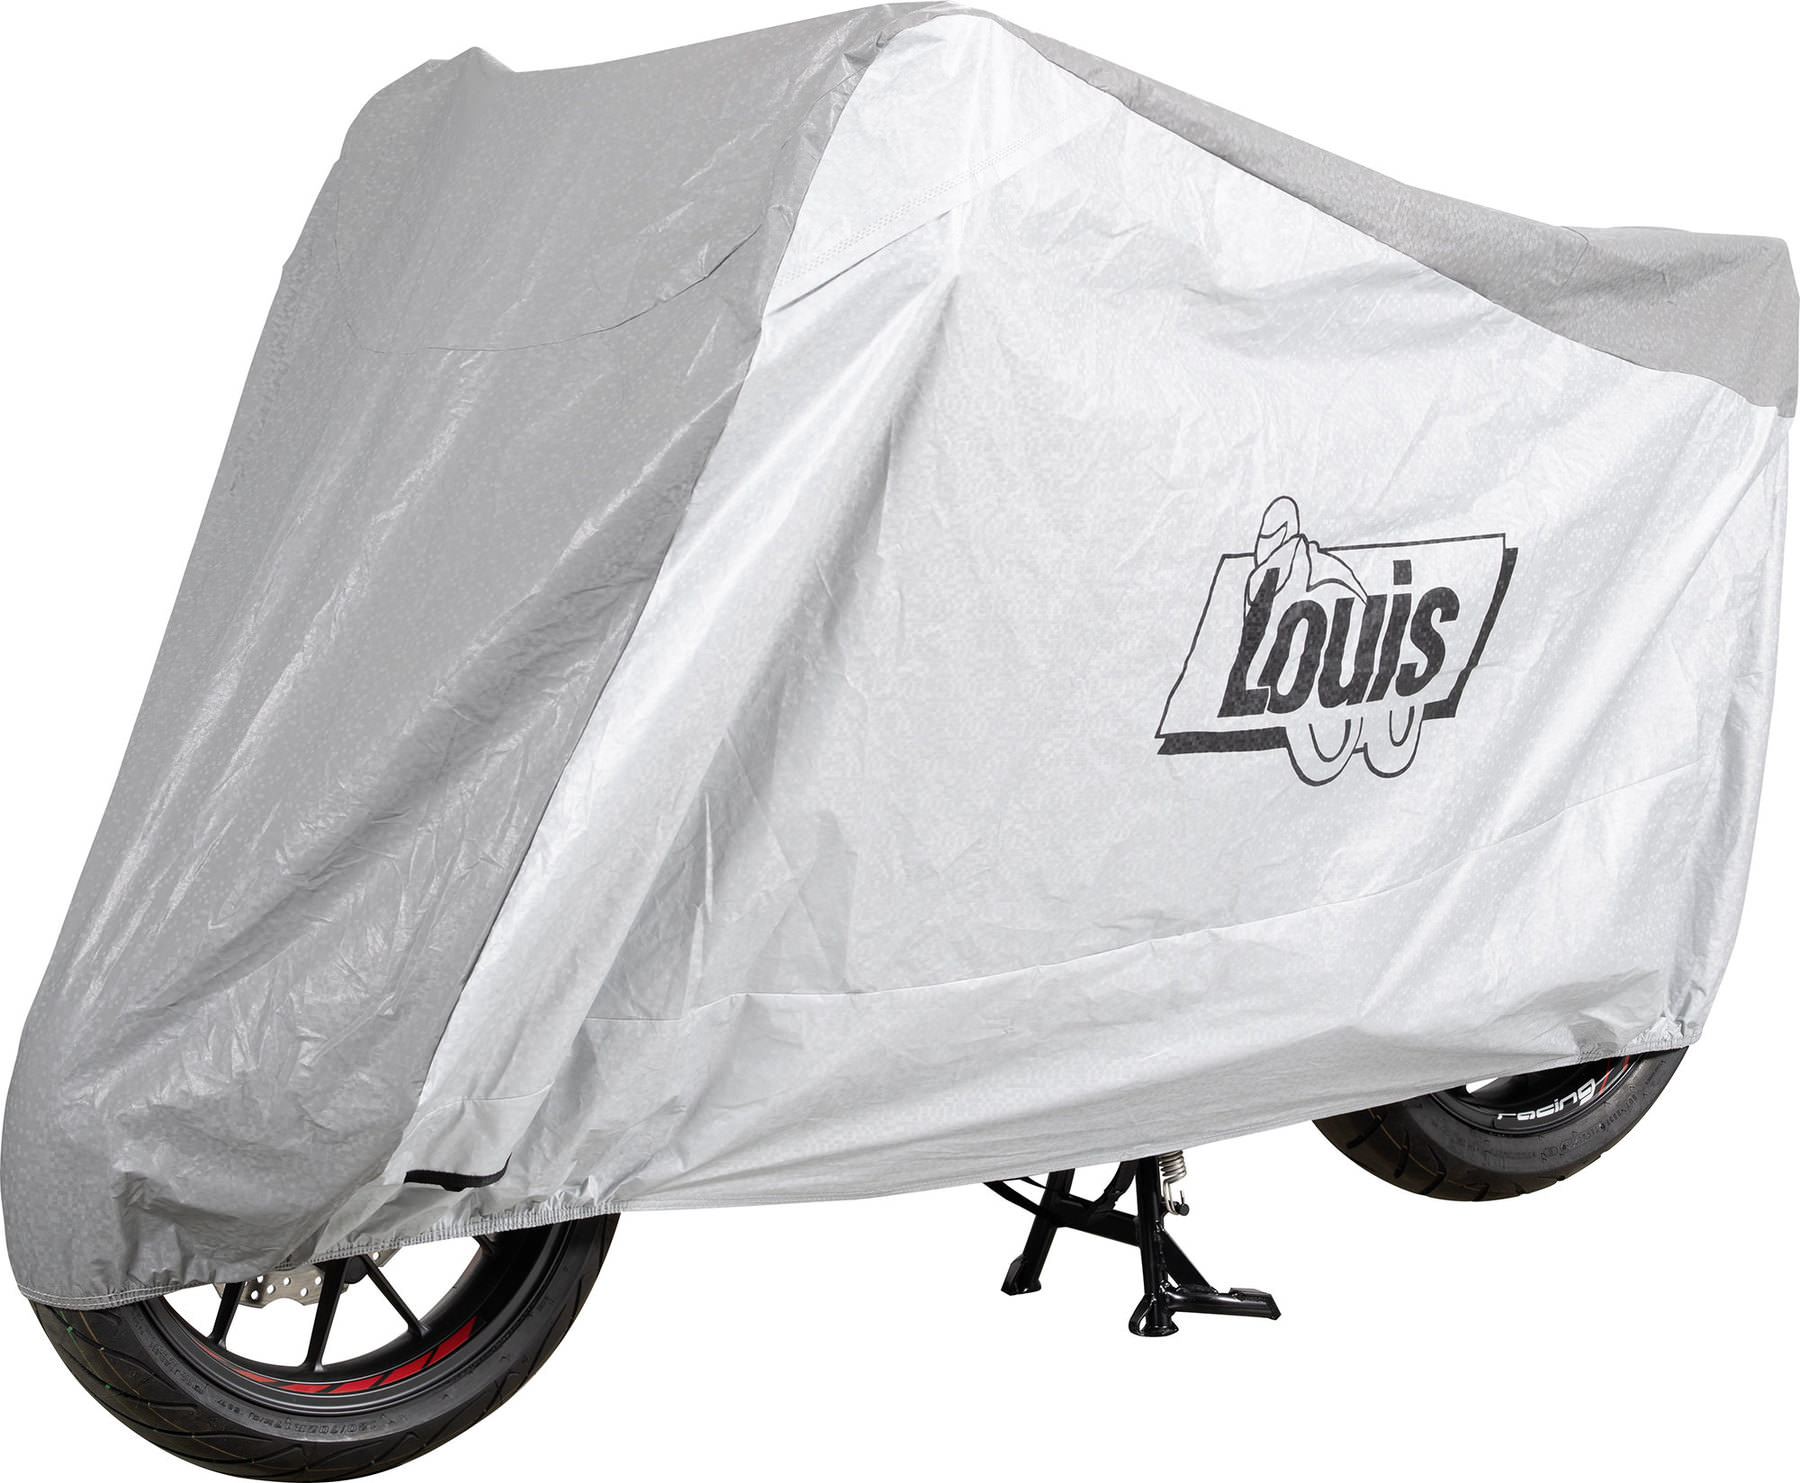 Buy Louis Flash Bike Cover | Louis 